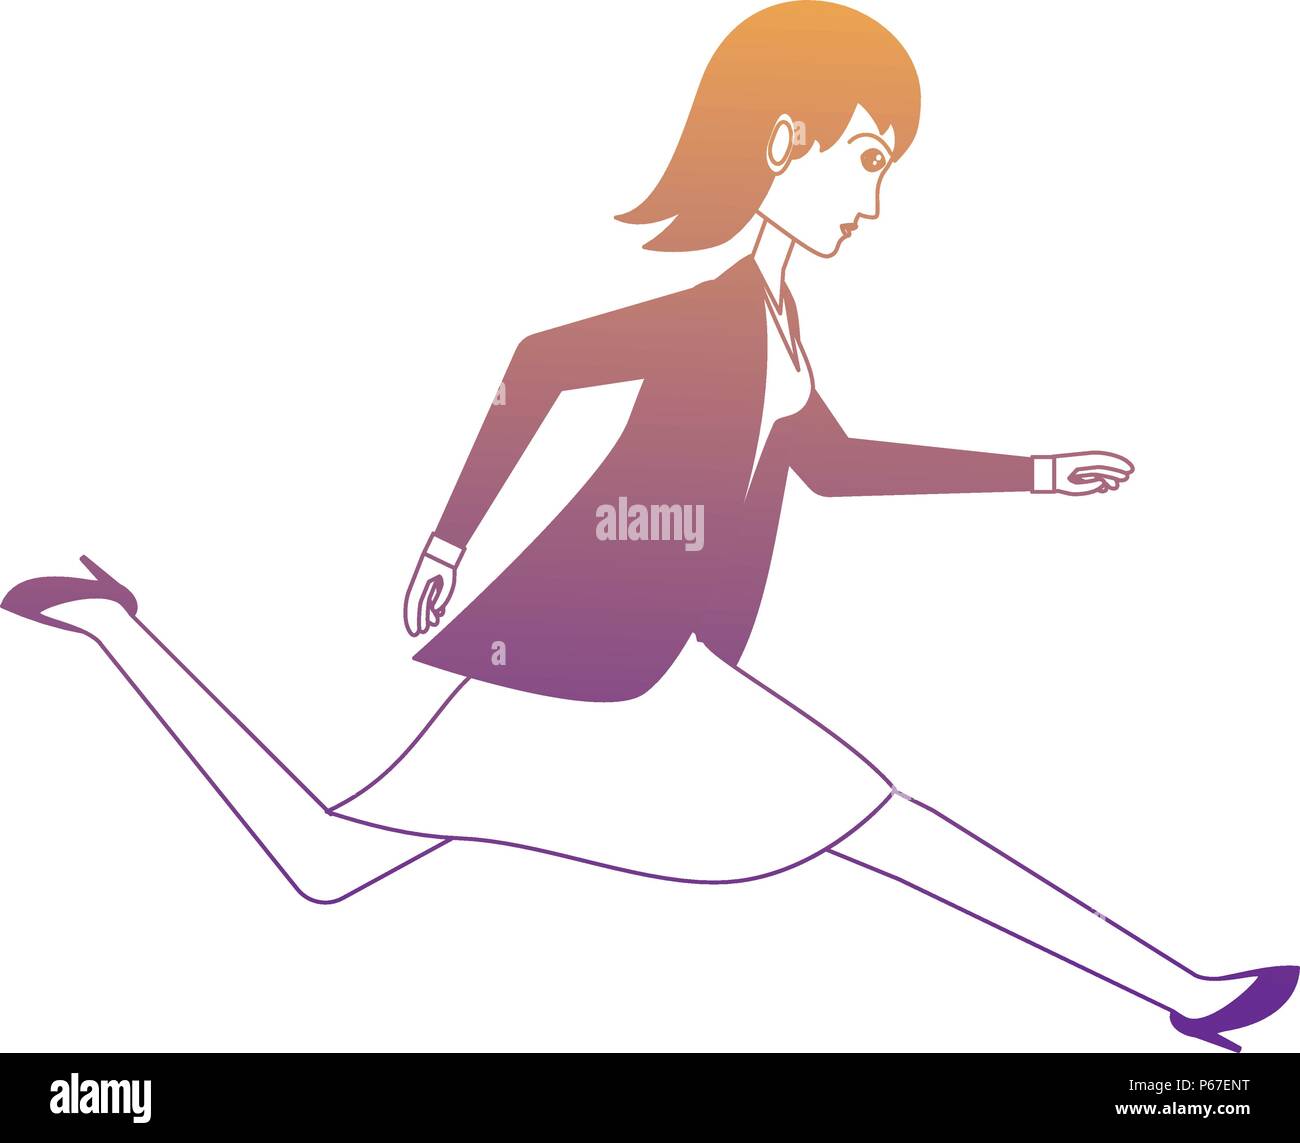 Cartoon Businesswoman Running Over White Background Vector Illustration Stock Vector Art Illustration Vector Image 210377604 Alamy alamy